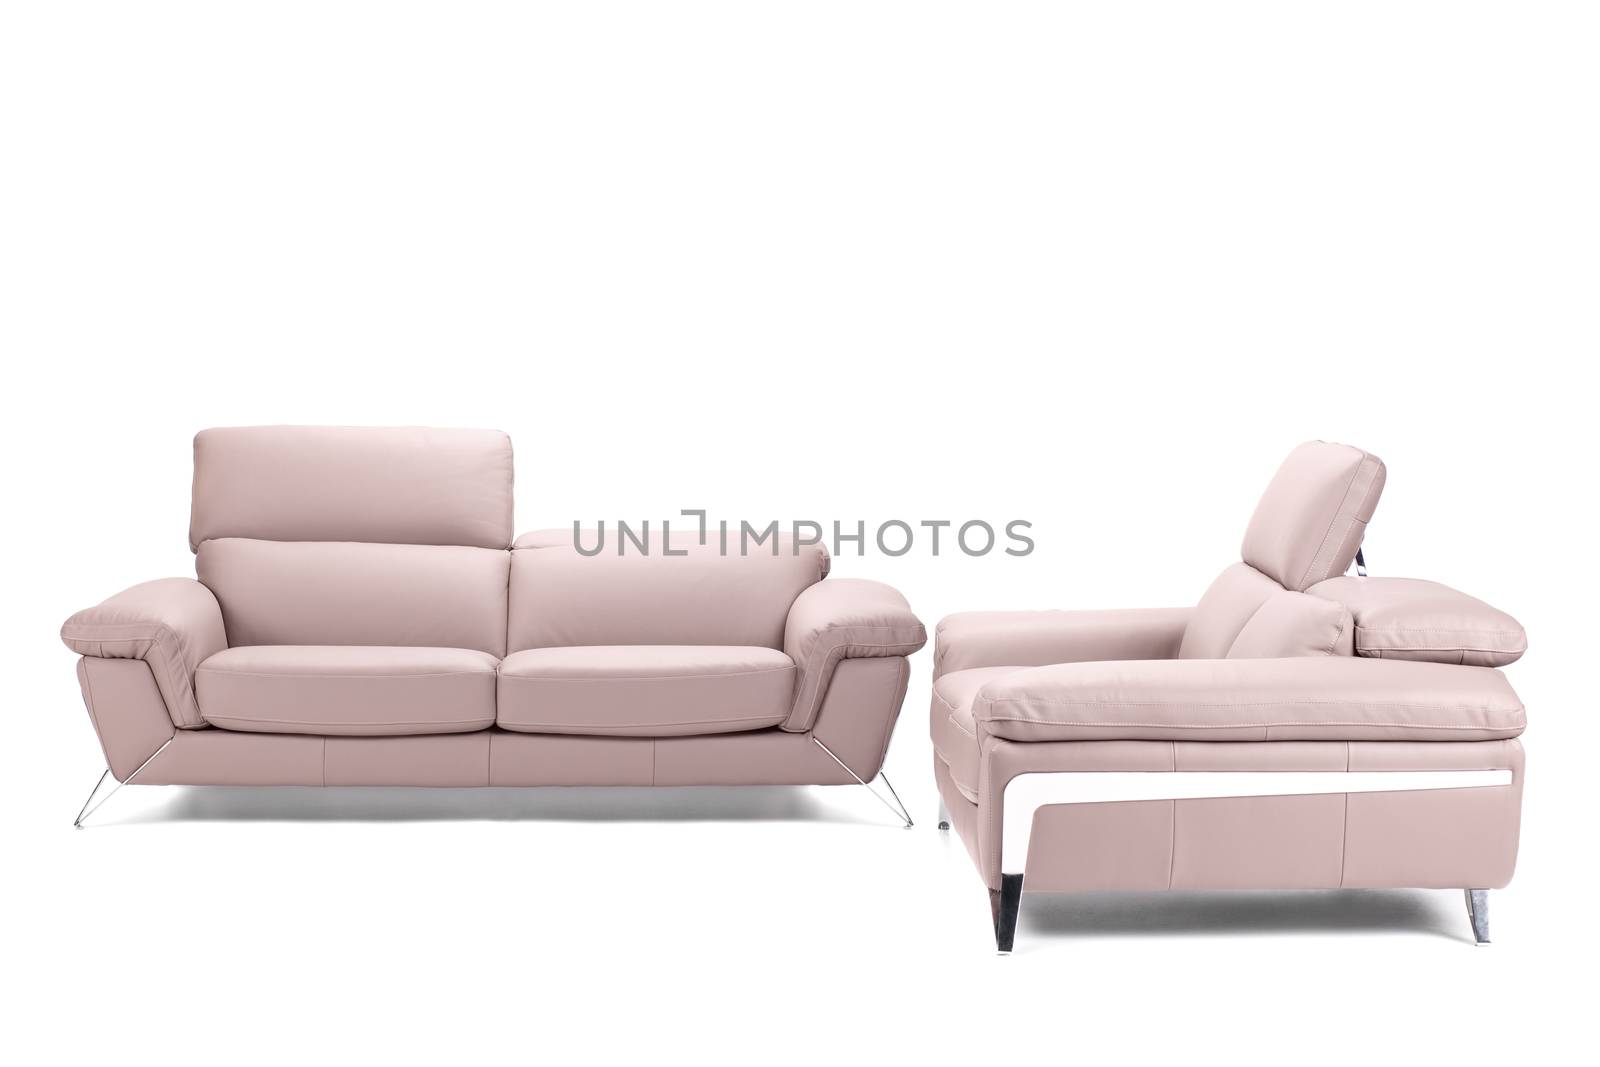 modern leather sofa isolated on white background